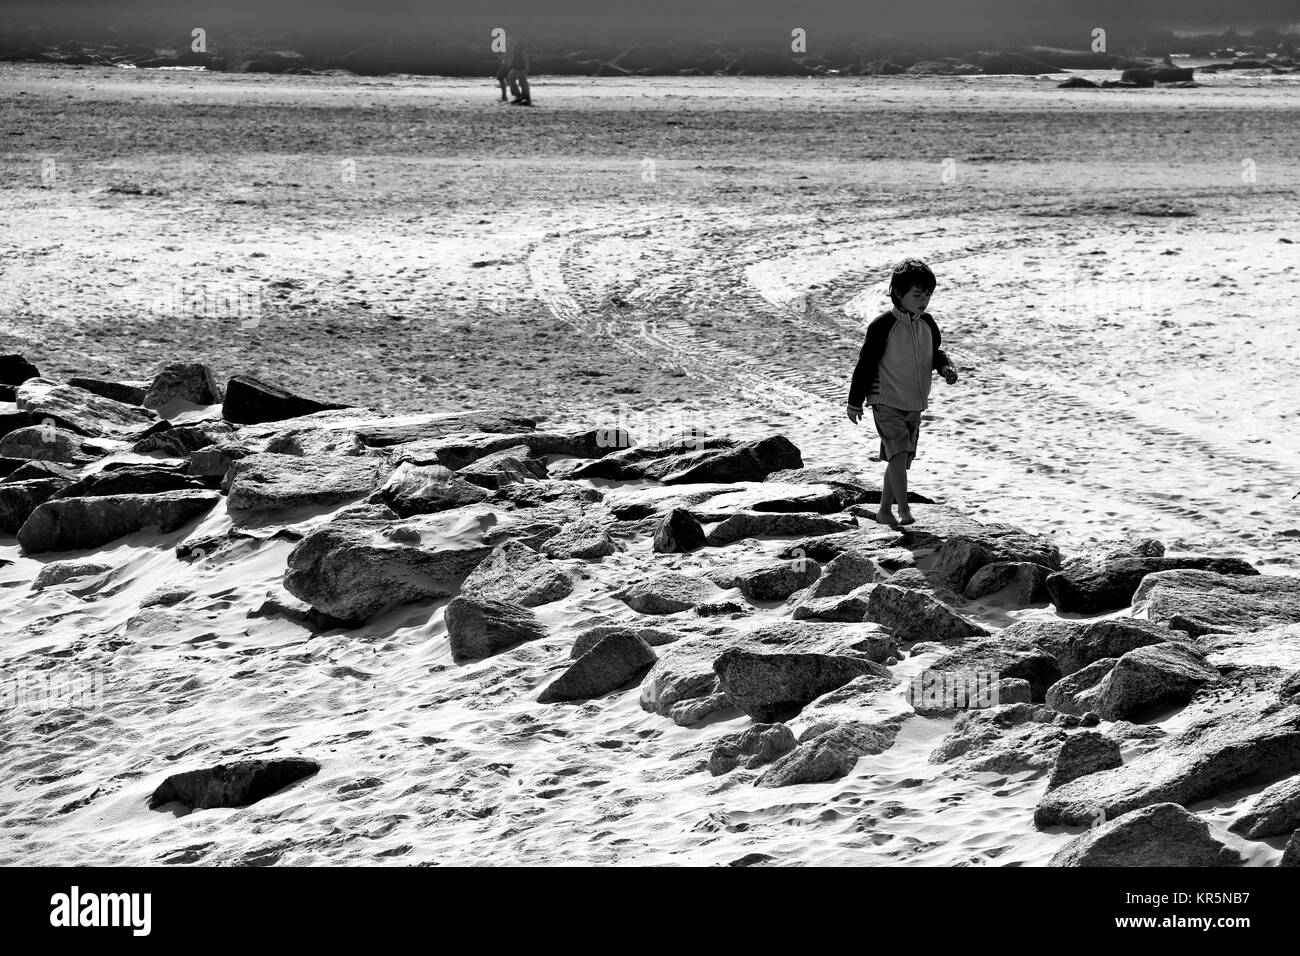 Solitude at the beach Stock Photo